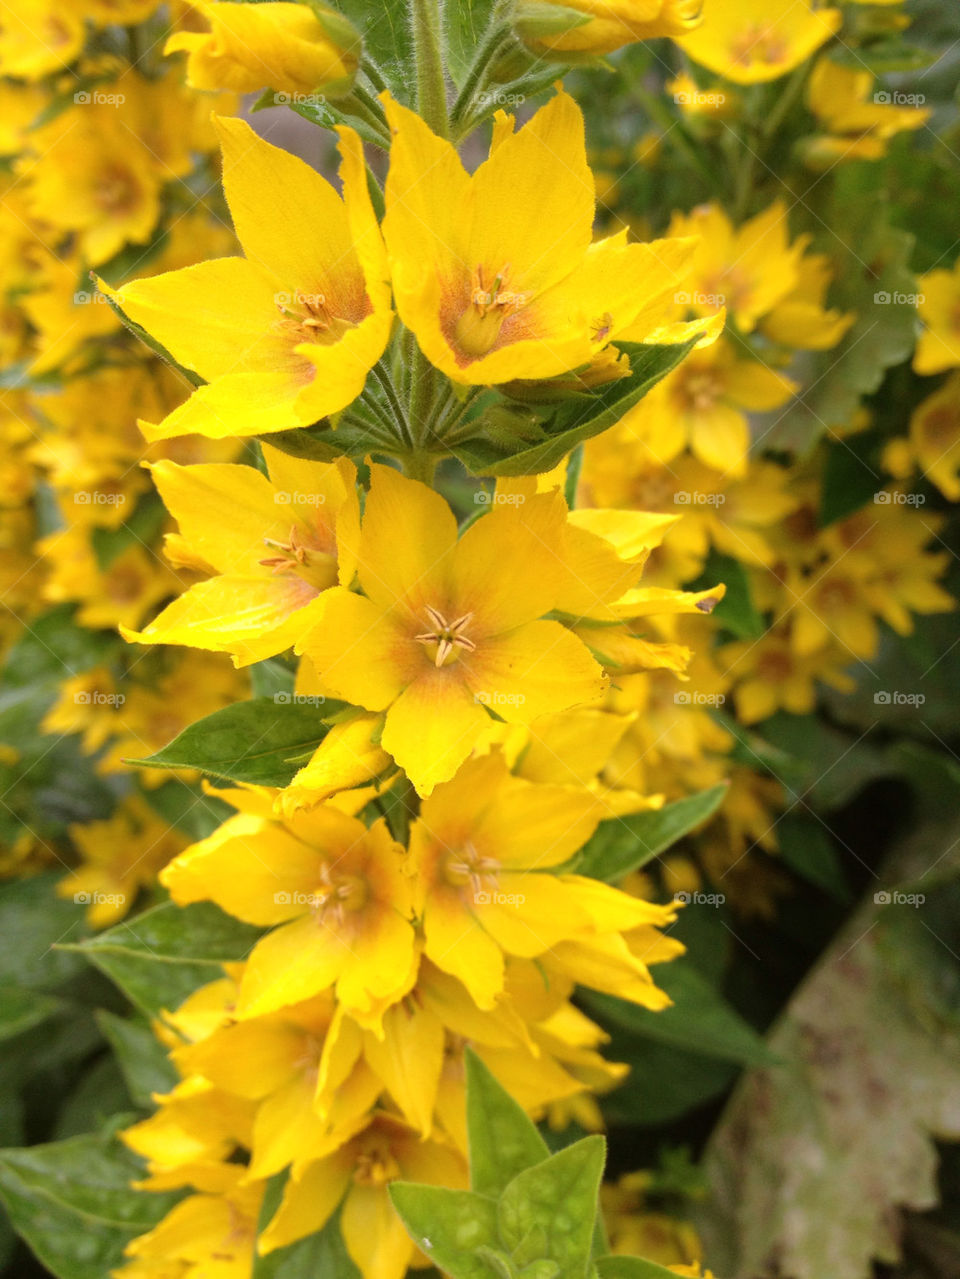 flowers garden yellow bright by gsplan